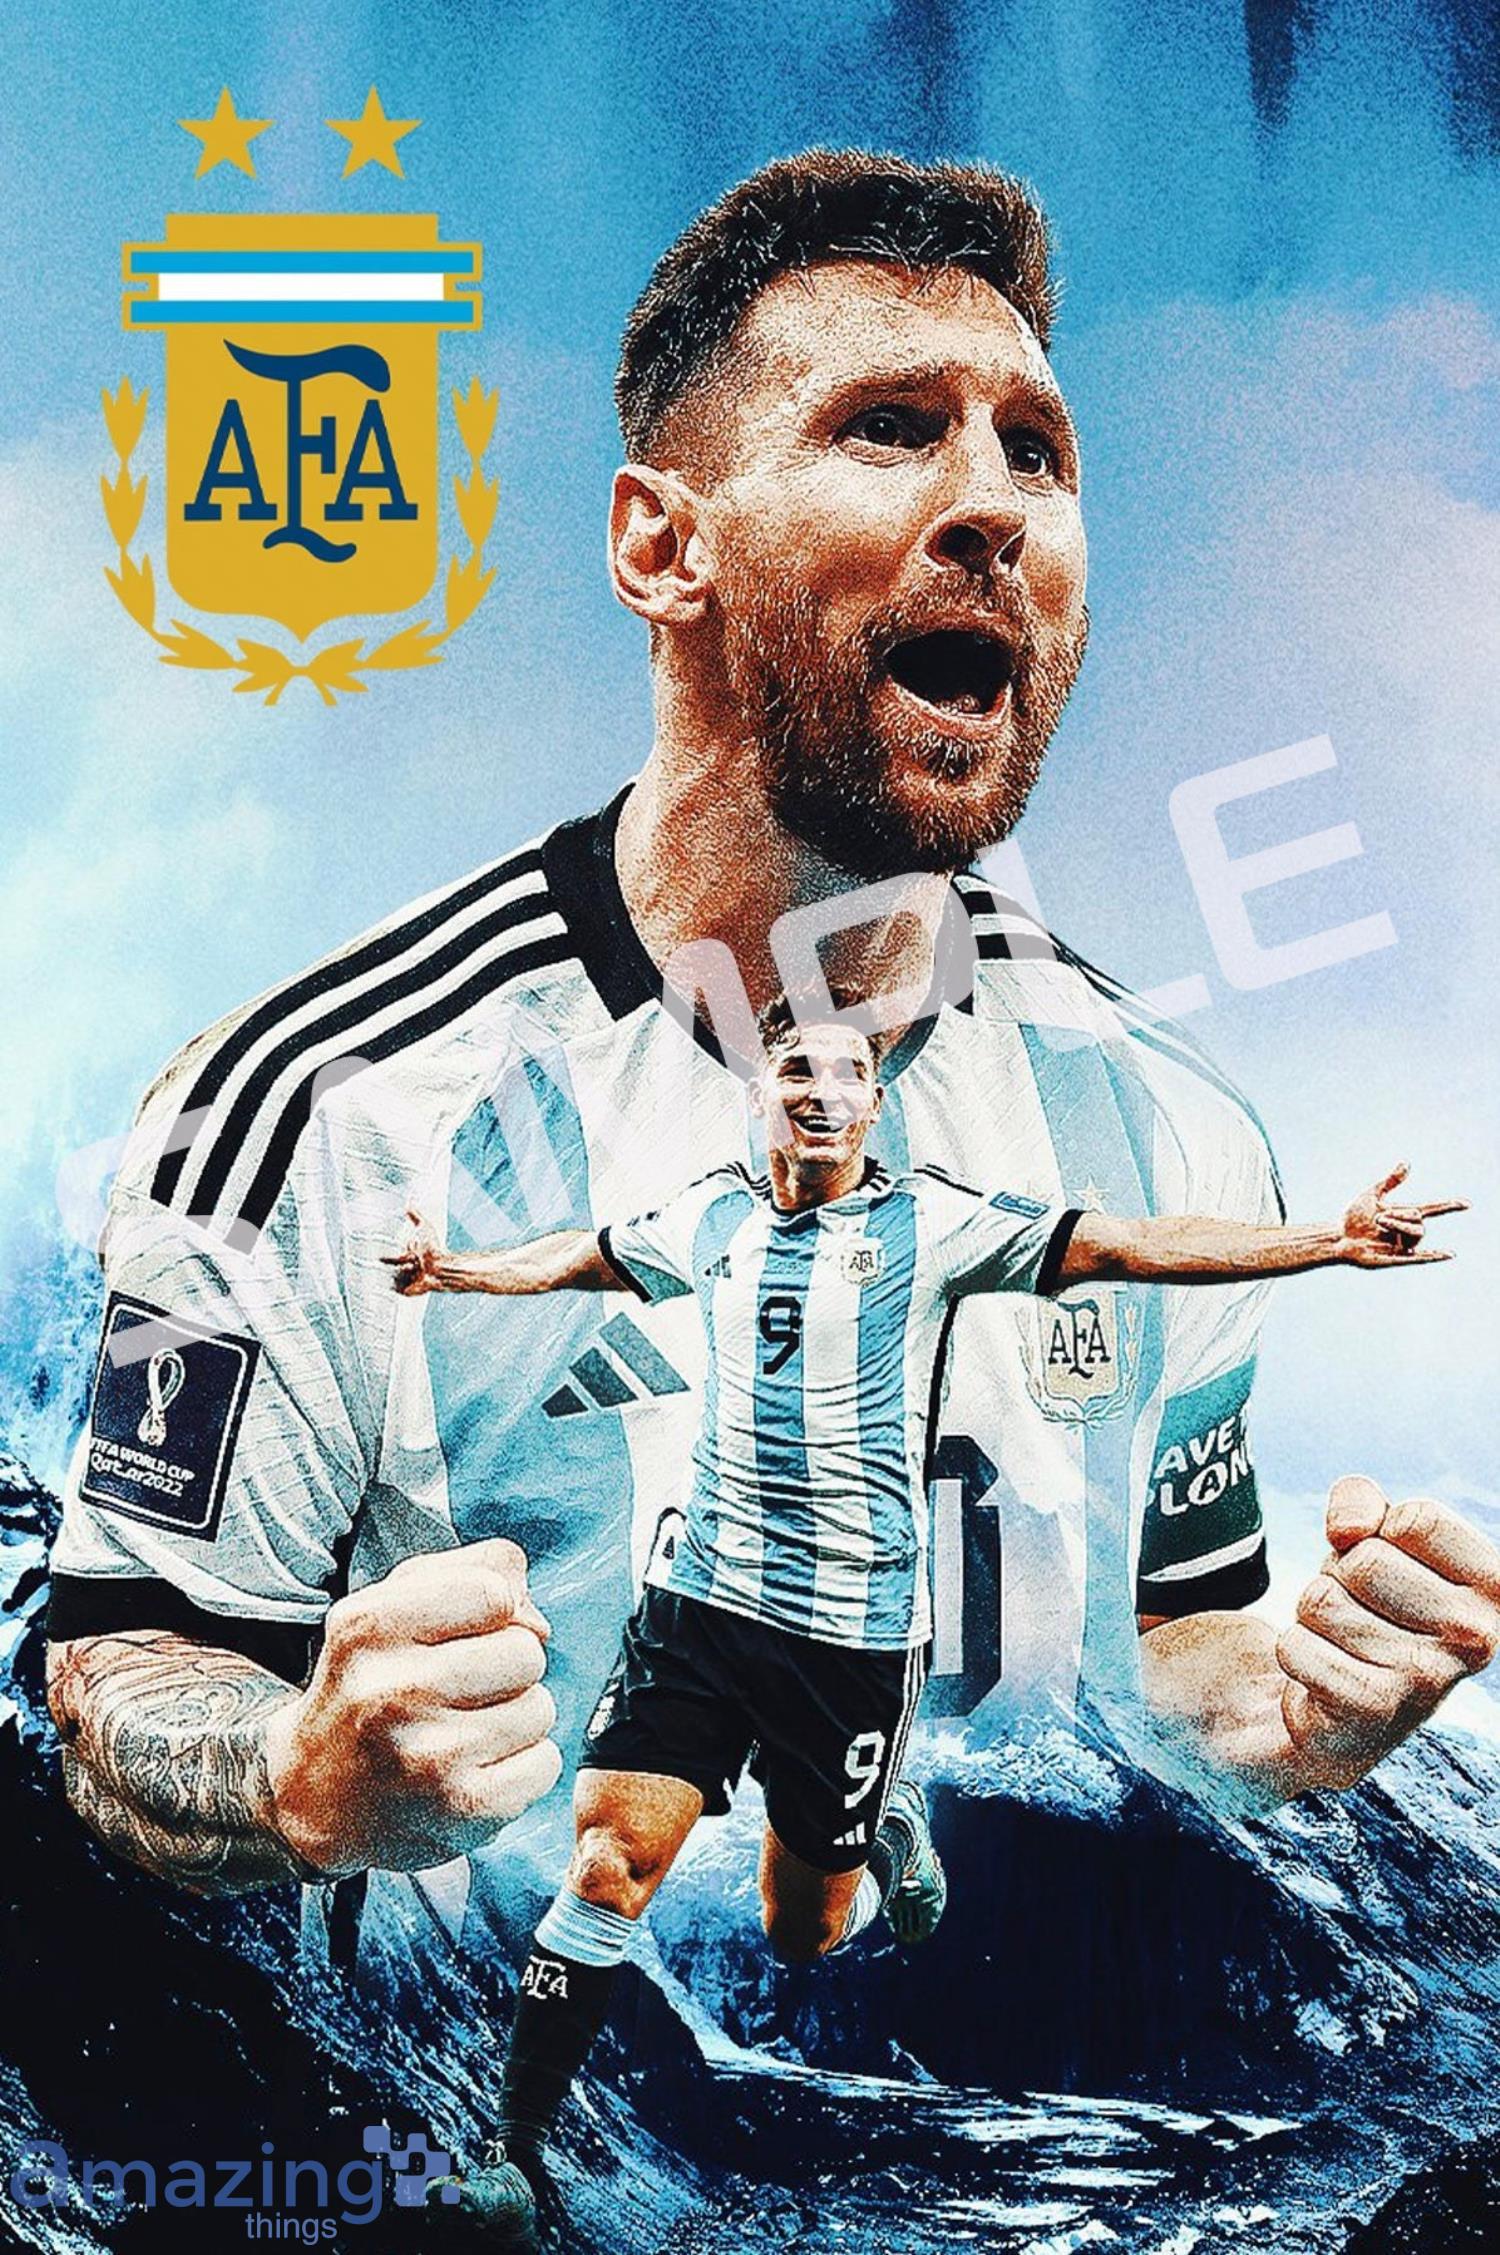 ACFELT 2022 Qatar Football World Cup Argentina Champions Poster,Soccer Superstar Lionel Messi Canvas Wall Art Print,motivational Sports Poster for